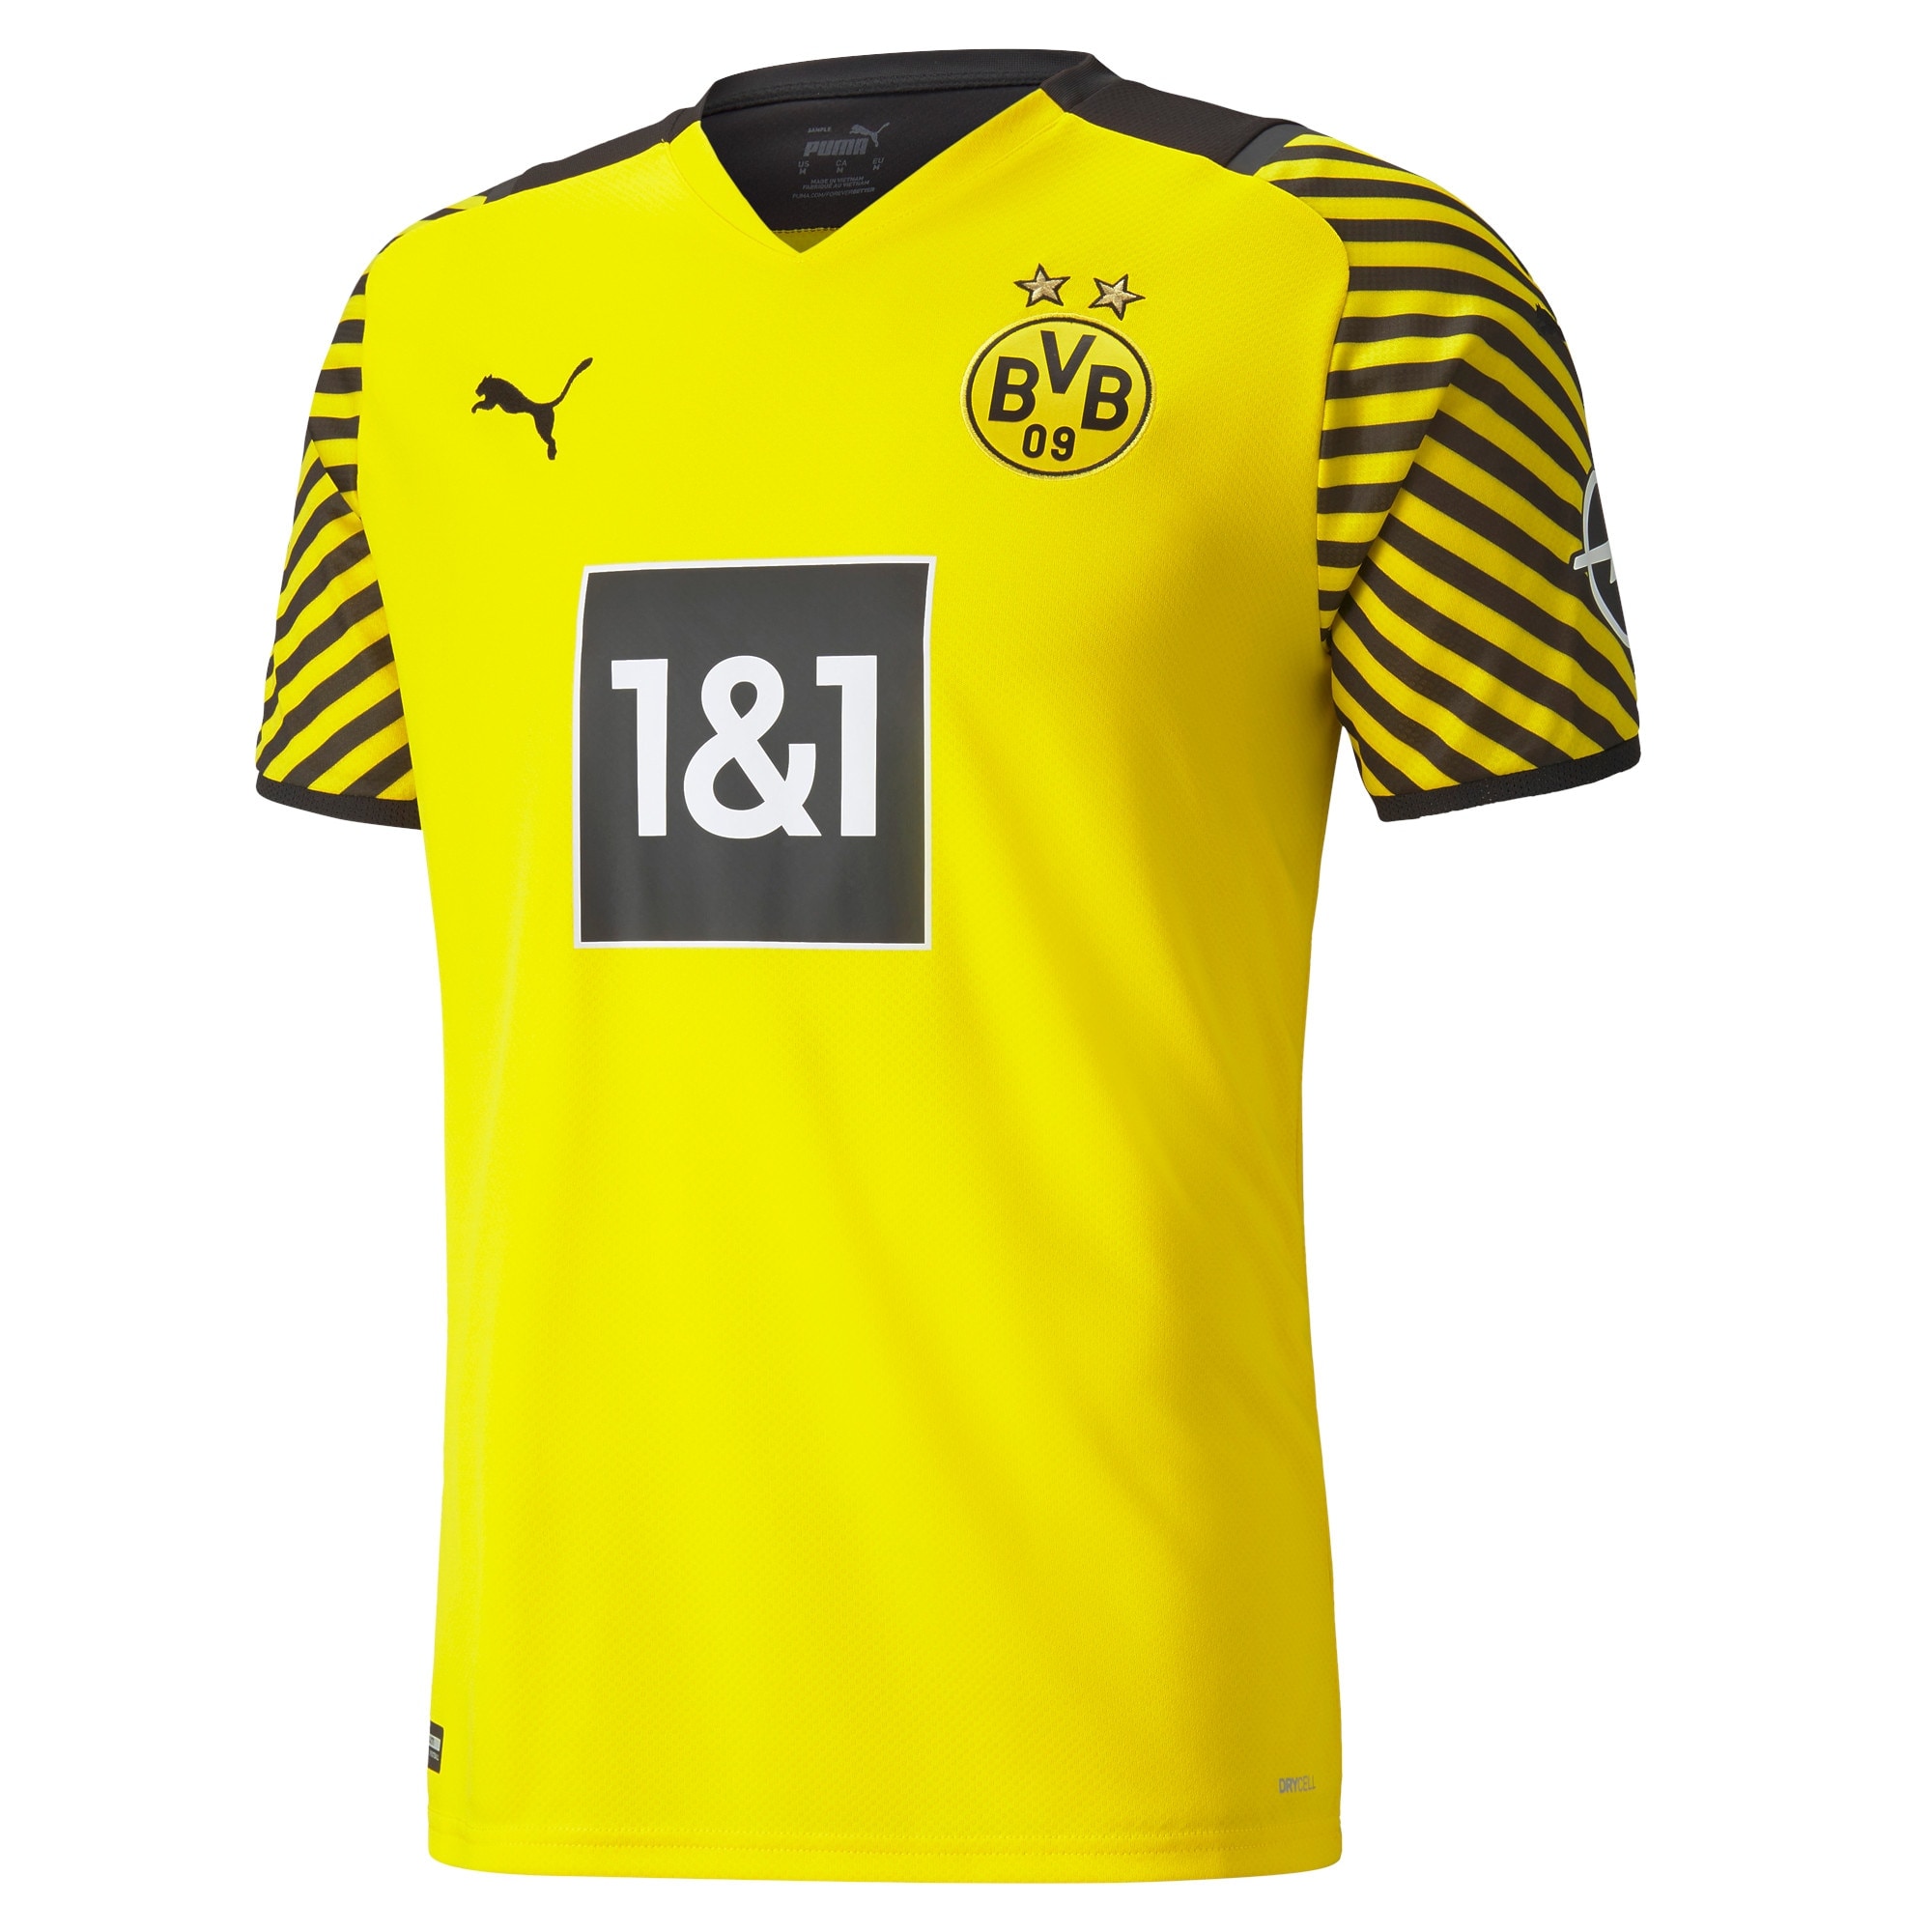 Borussia Dortmund Home Shirt 2021-22 with Sancho 7 printing